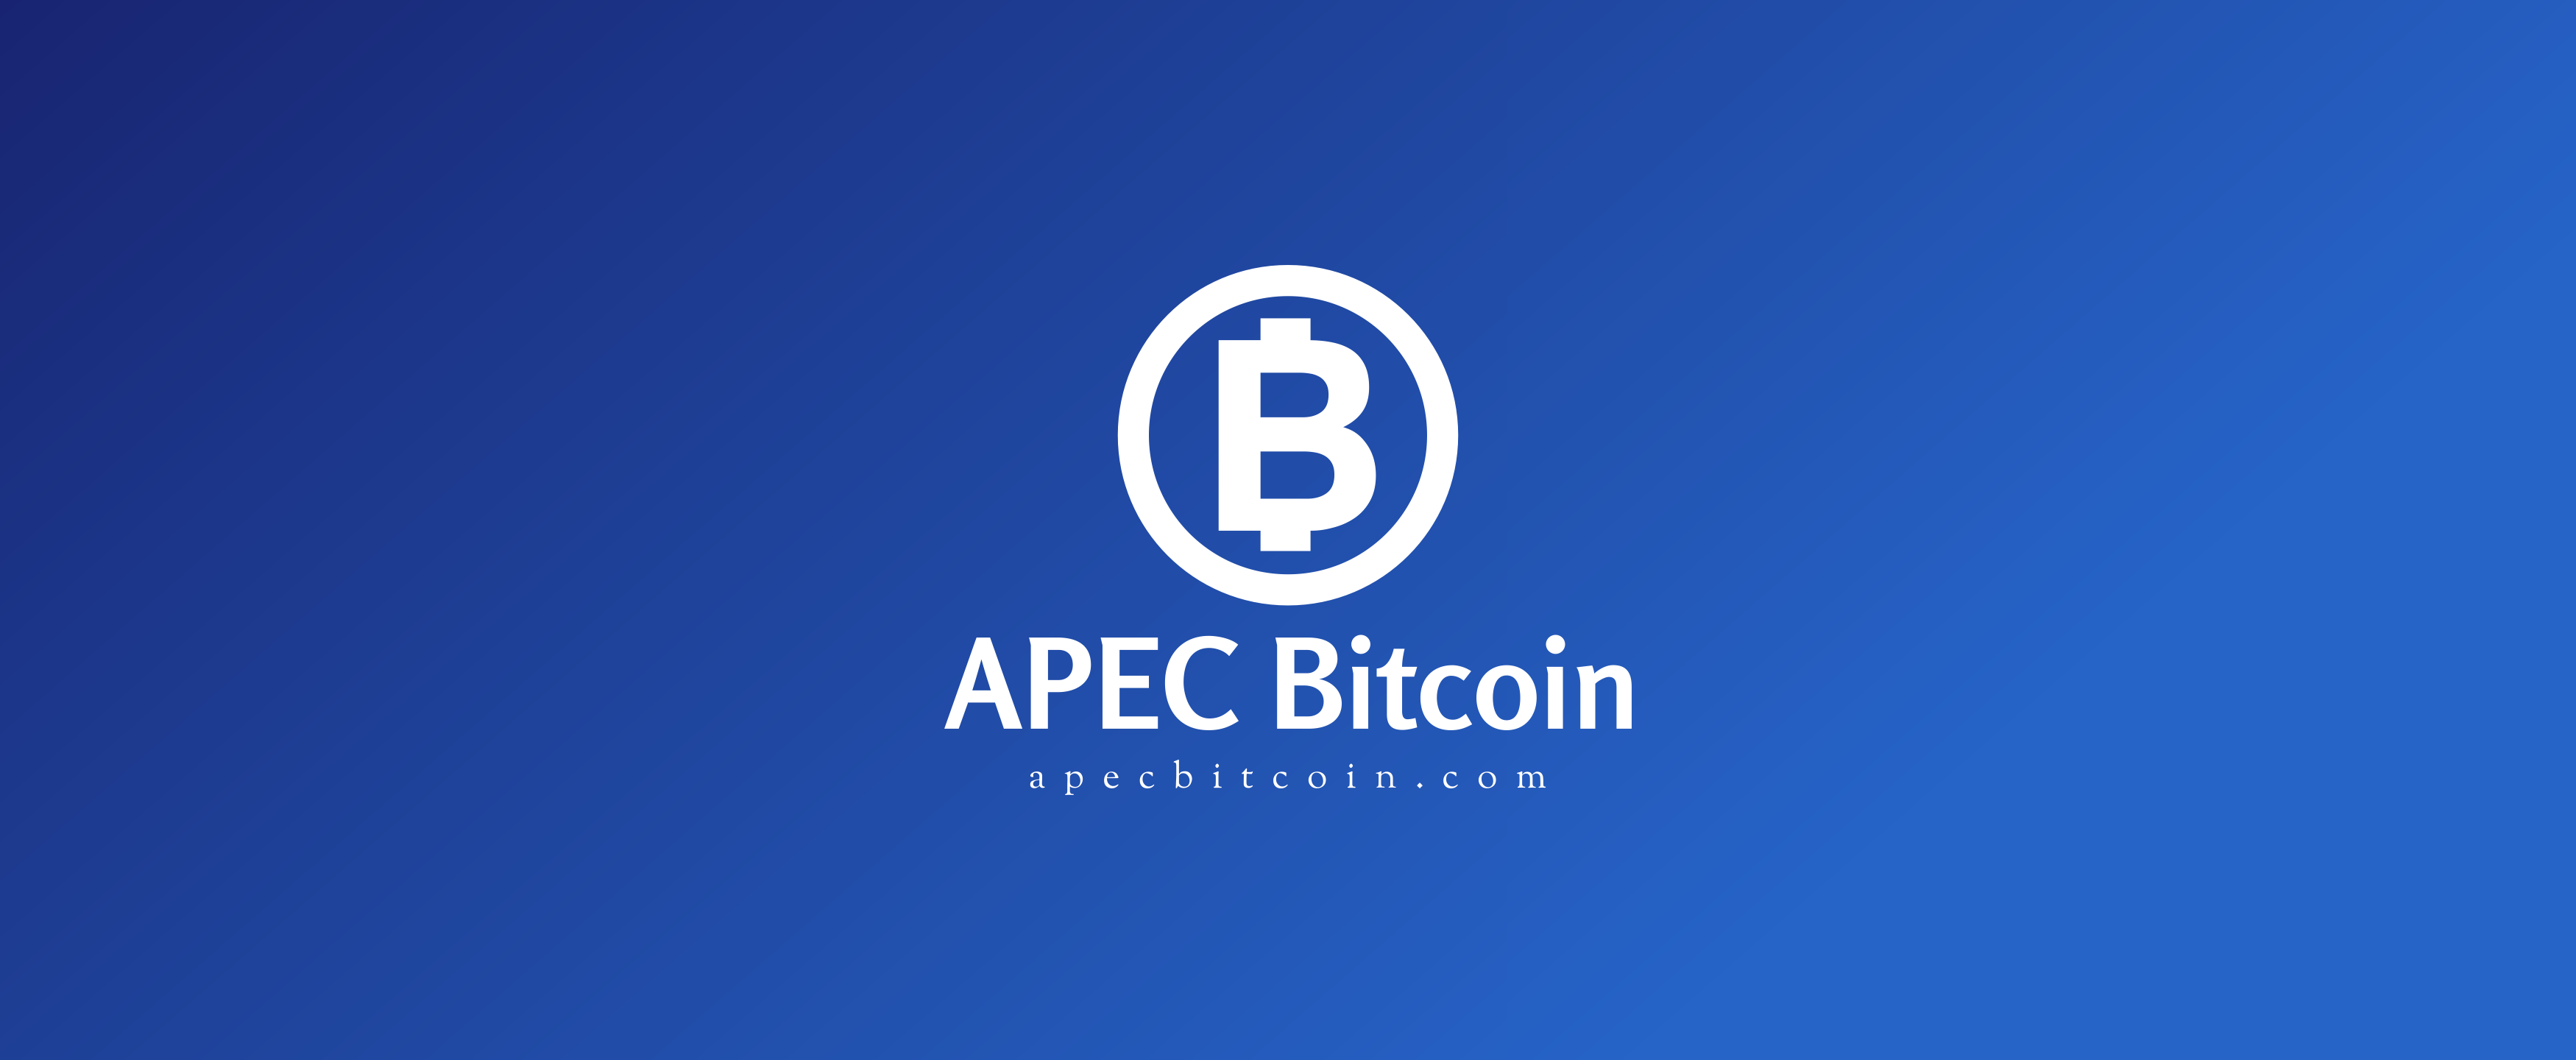 APEC Bitcoin